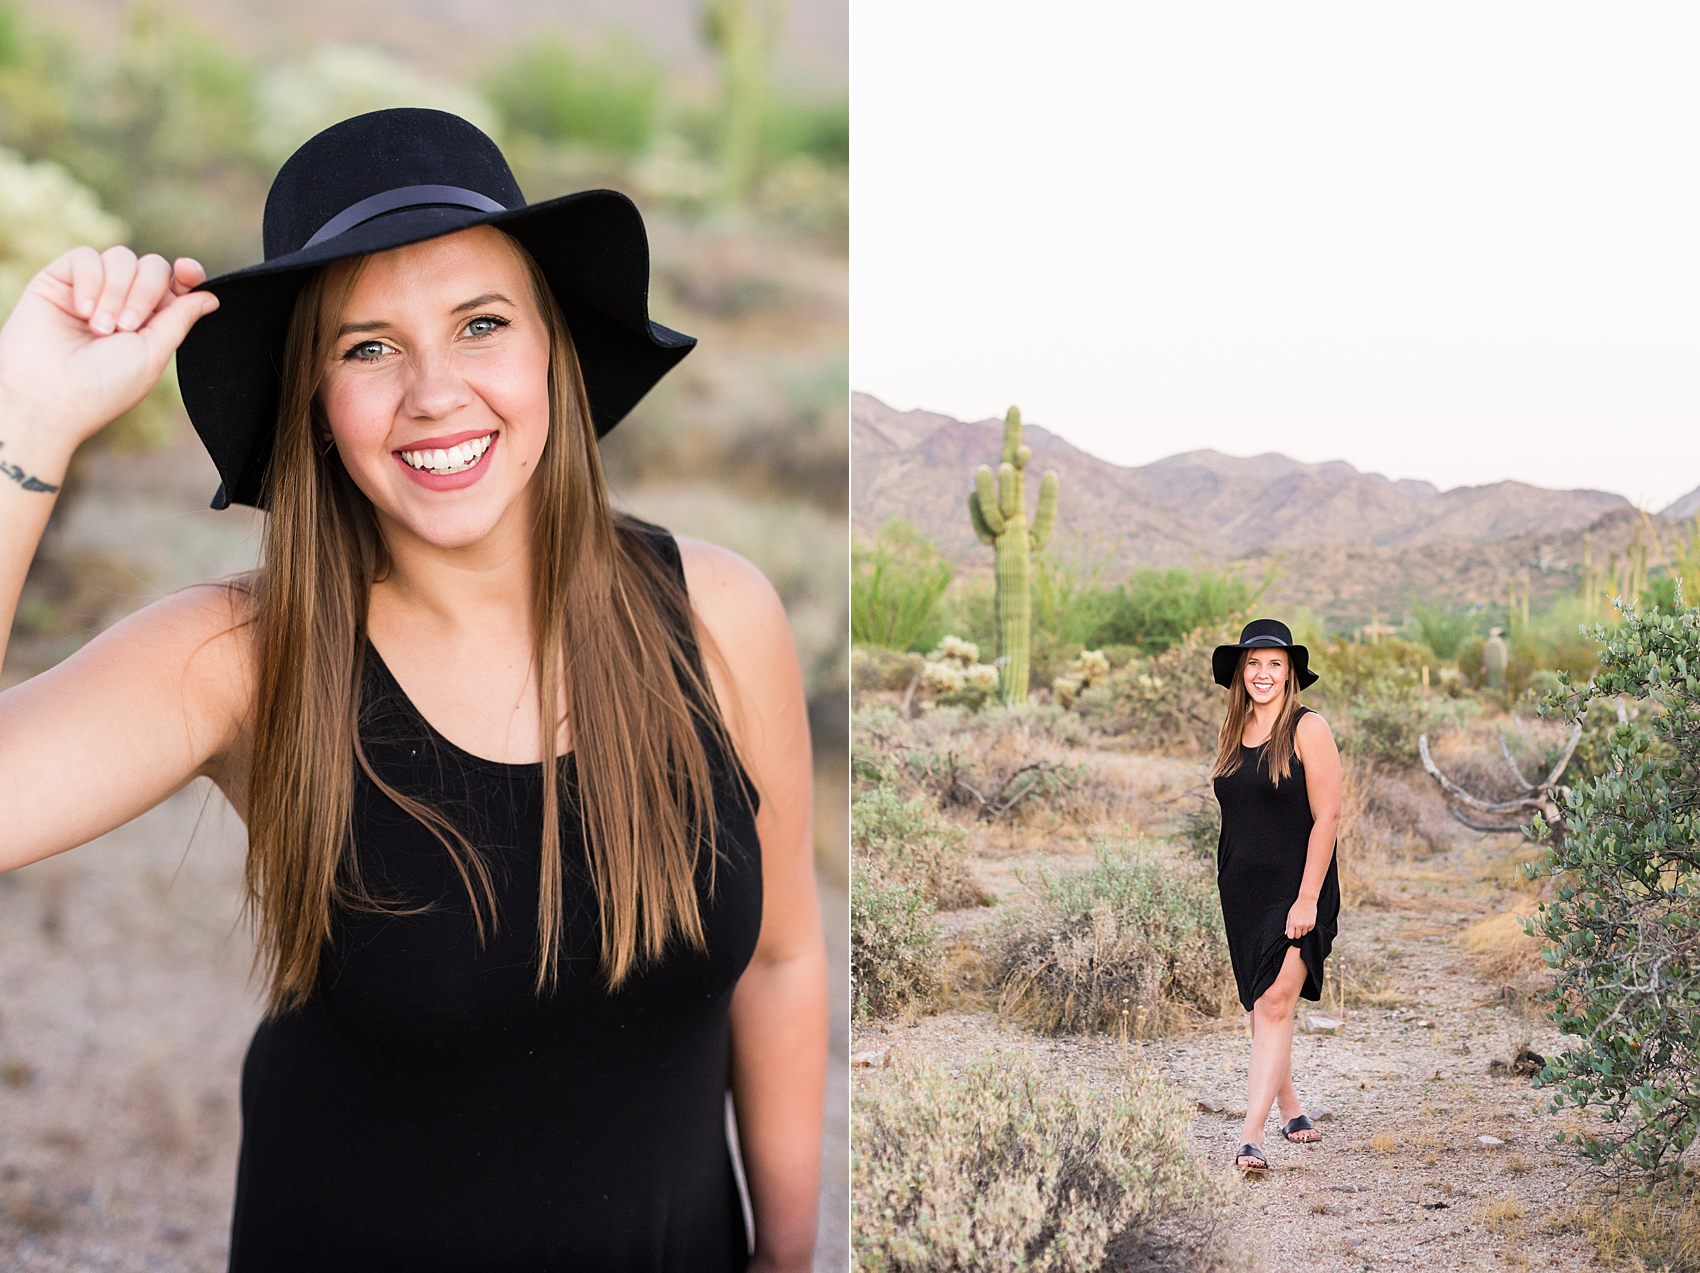 Leah Hope Photography | Scottsdale Phoenix Arizona | Desert Landscape Cactus Scenery | McDowell Mountains | Head Shots | Brand Photography | Portraits